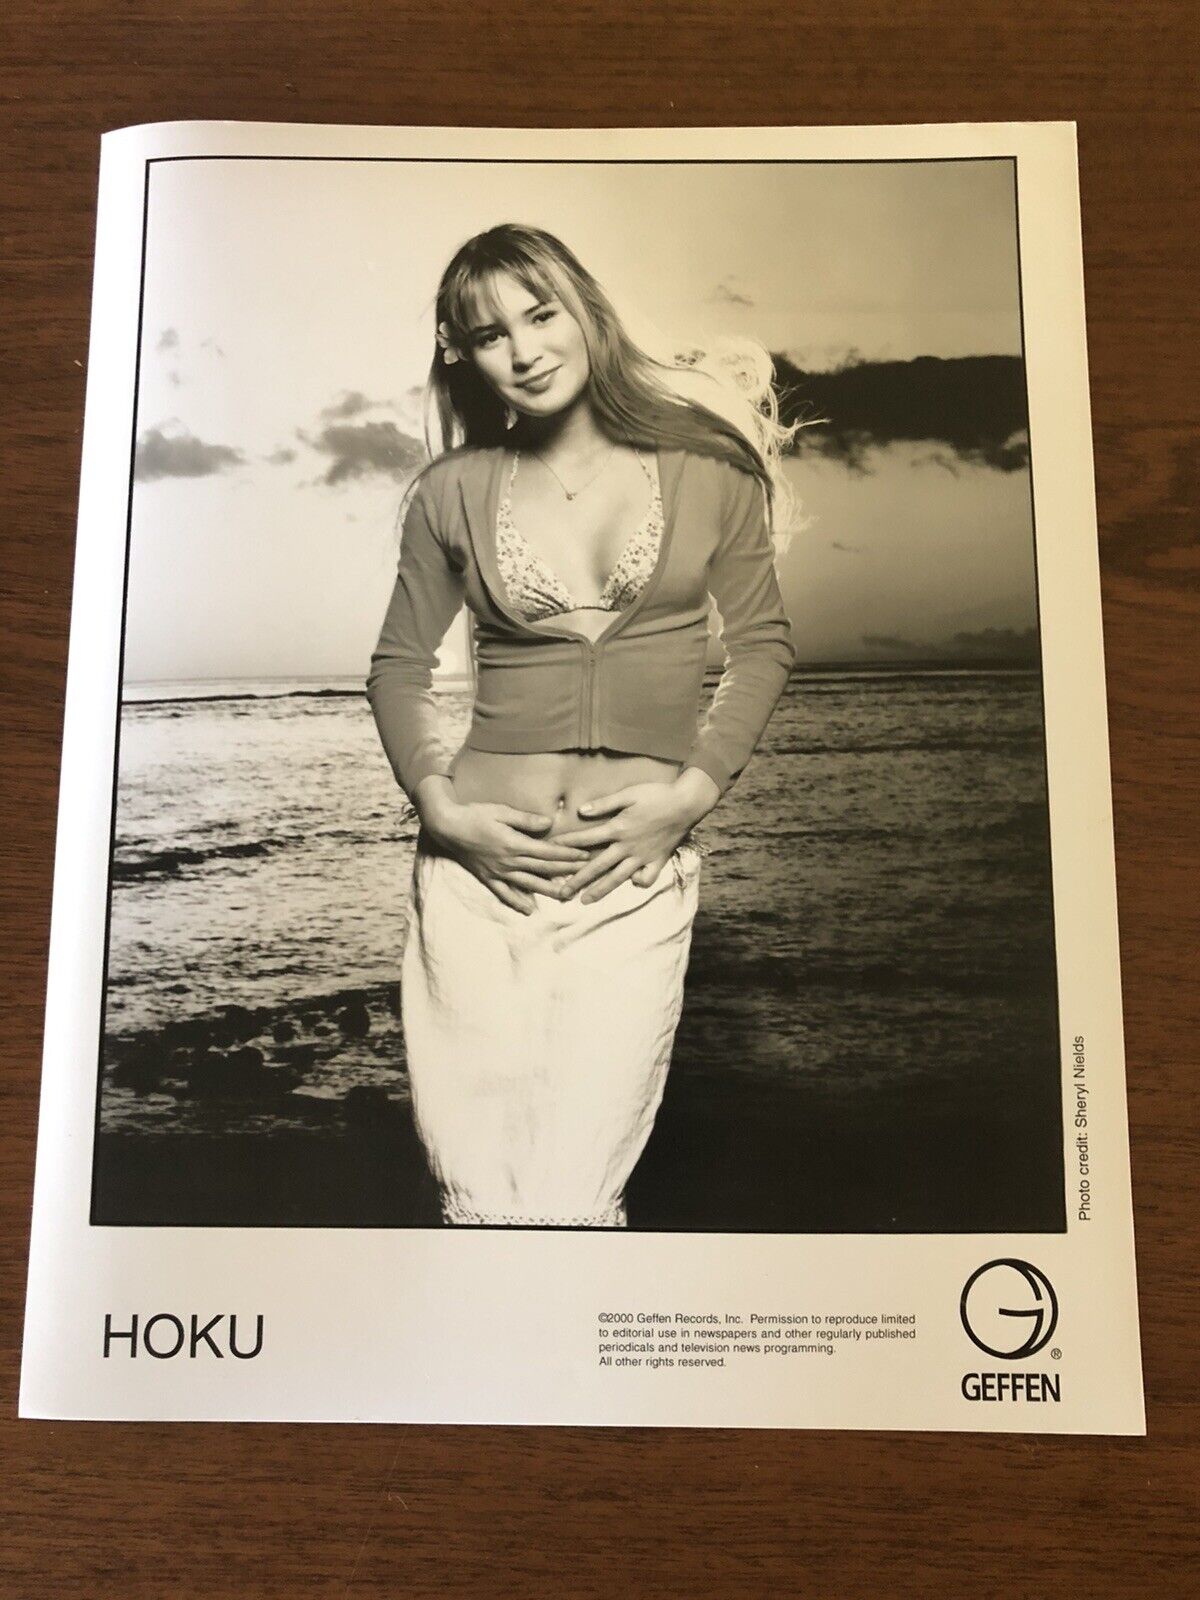 Hoku Rare Vintage 8x10 Press Photo - Image #1